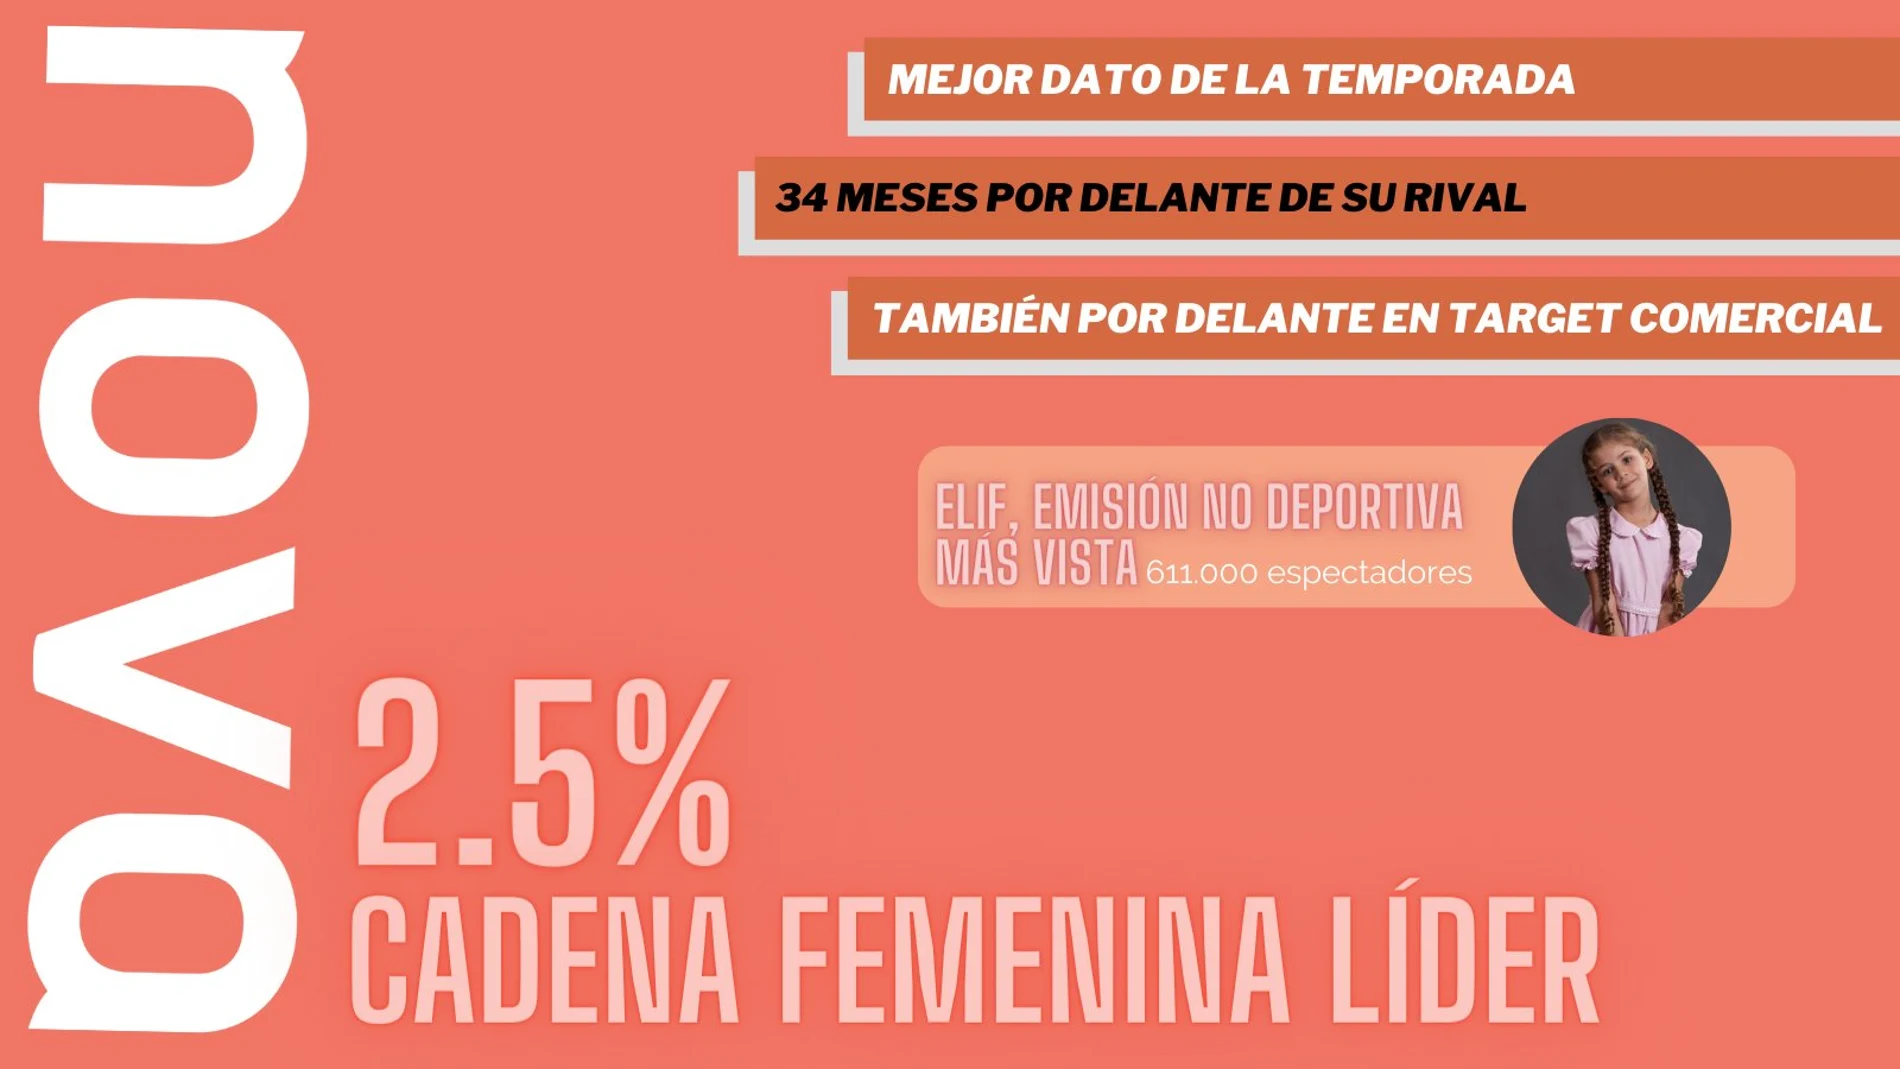 Nova (2,5%, +0,1), cadena femenina líder por 34º mes, con su récord de temporada